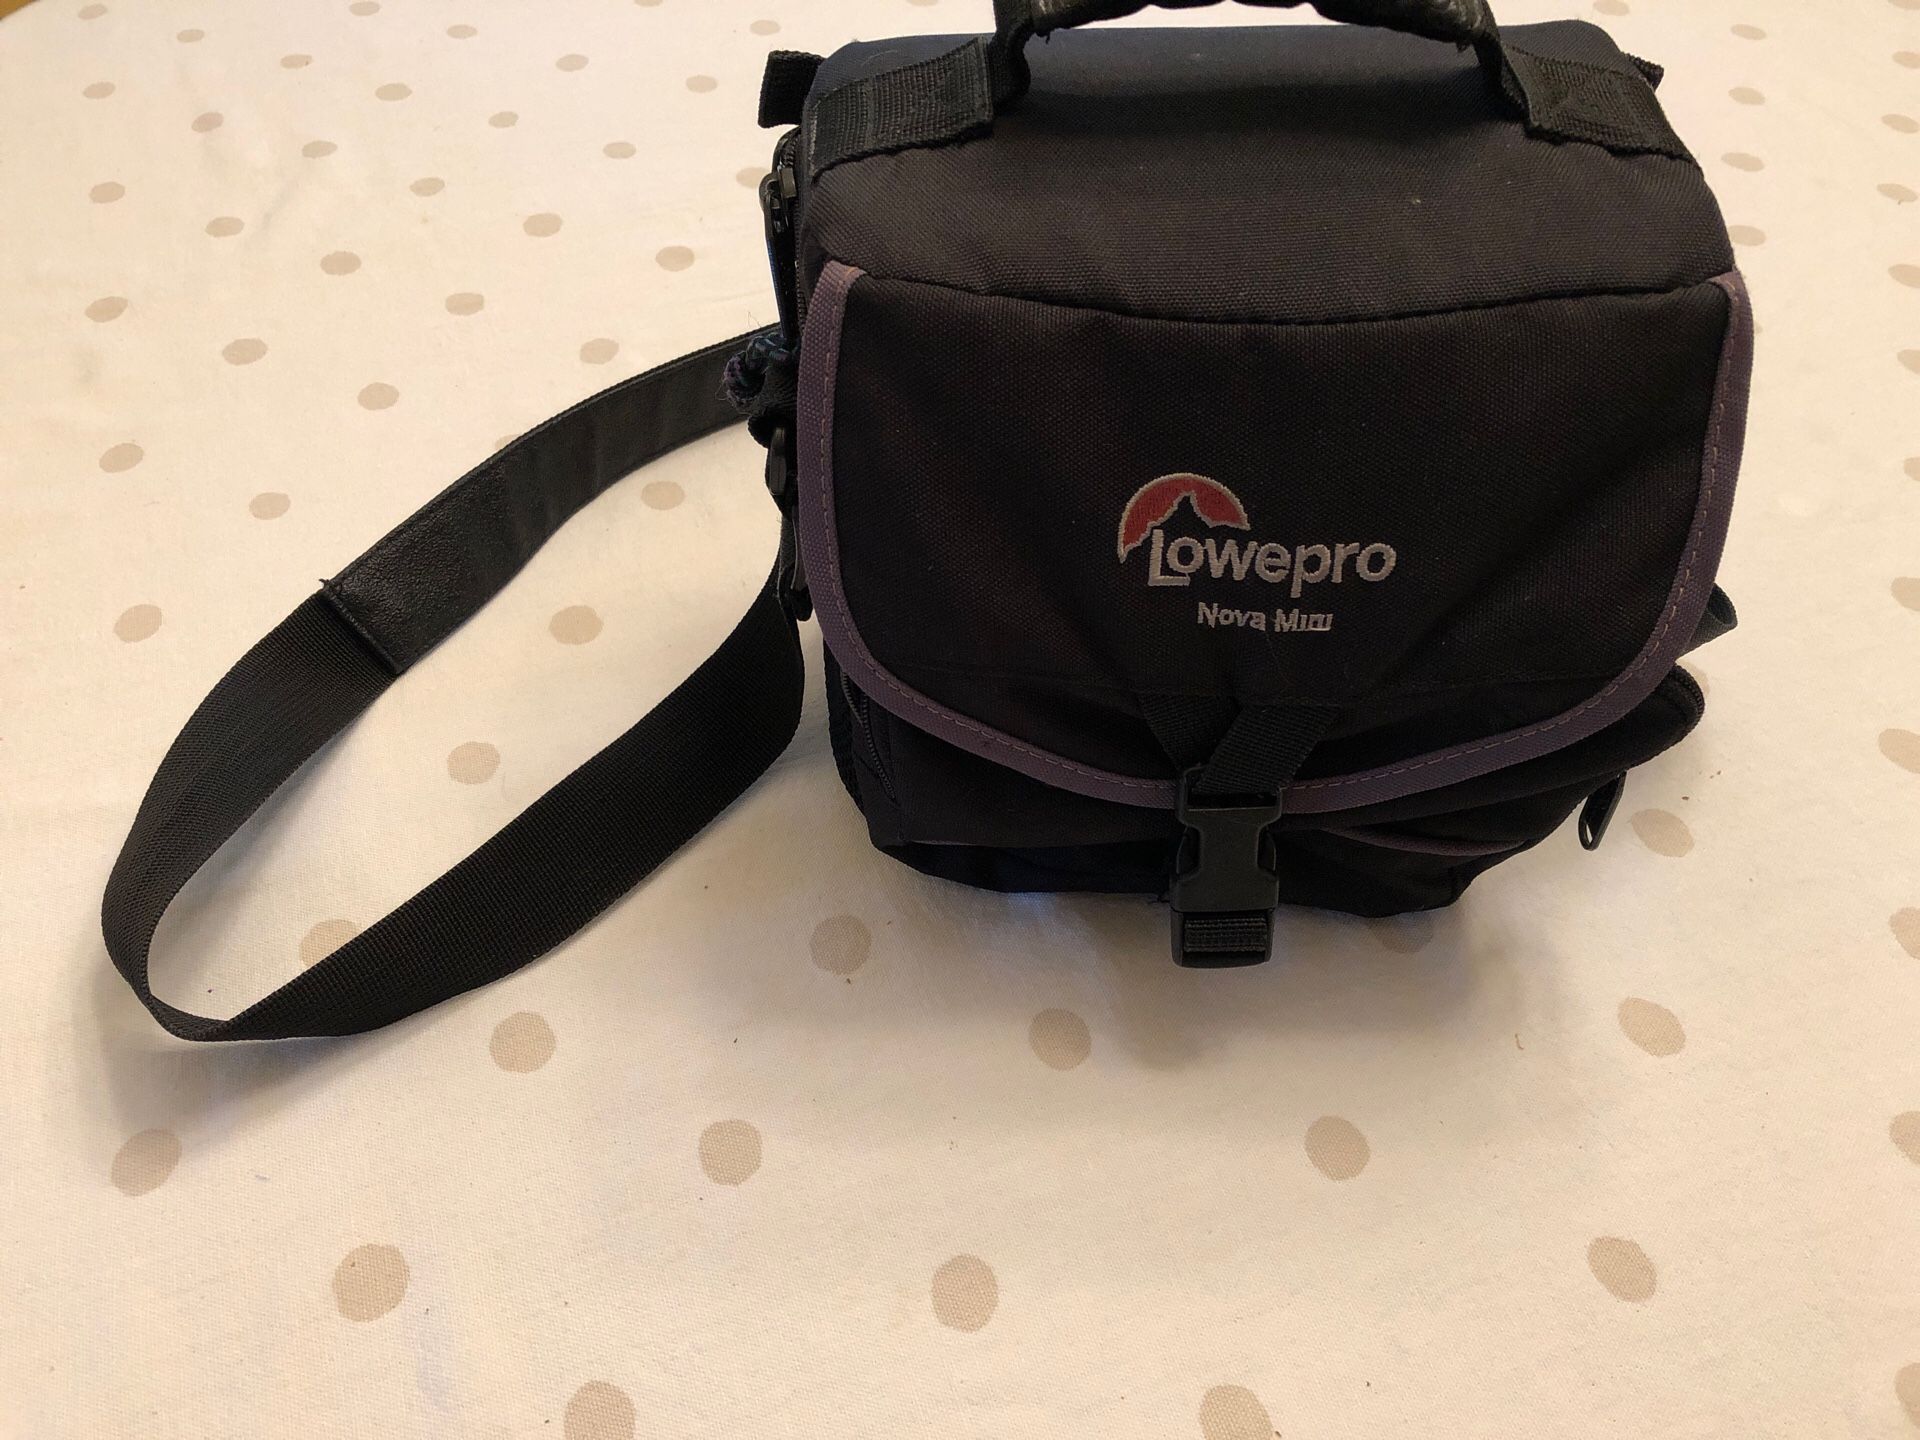 Lowepro Nova Mini Camera Bag